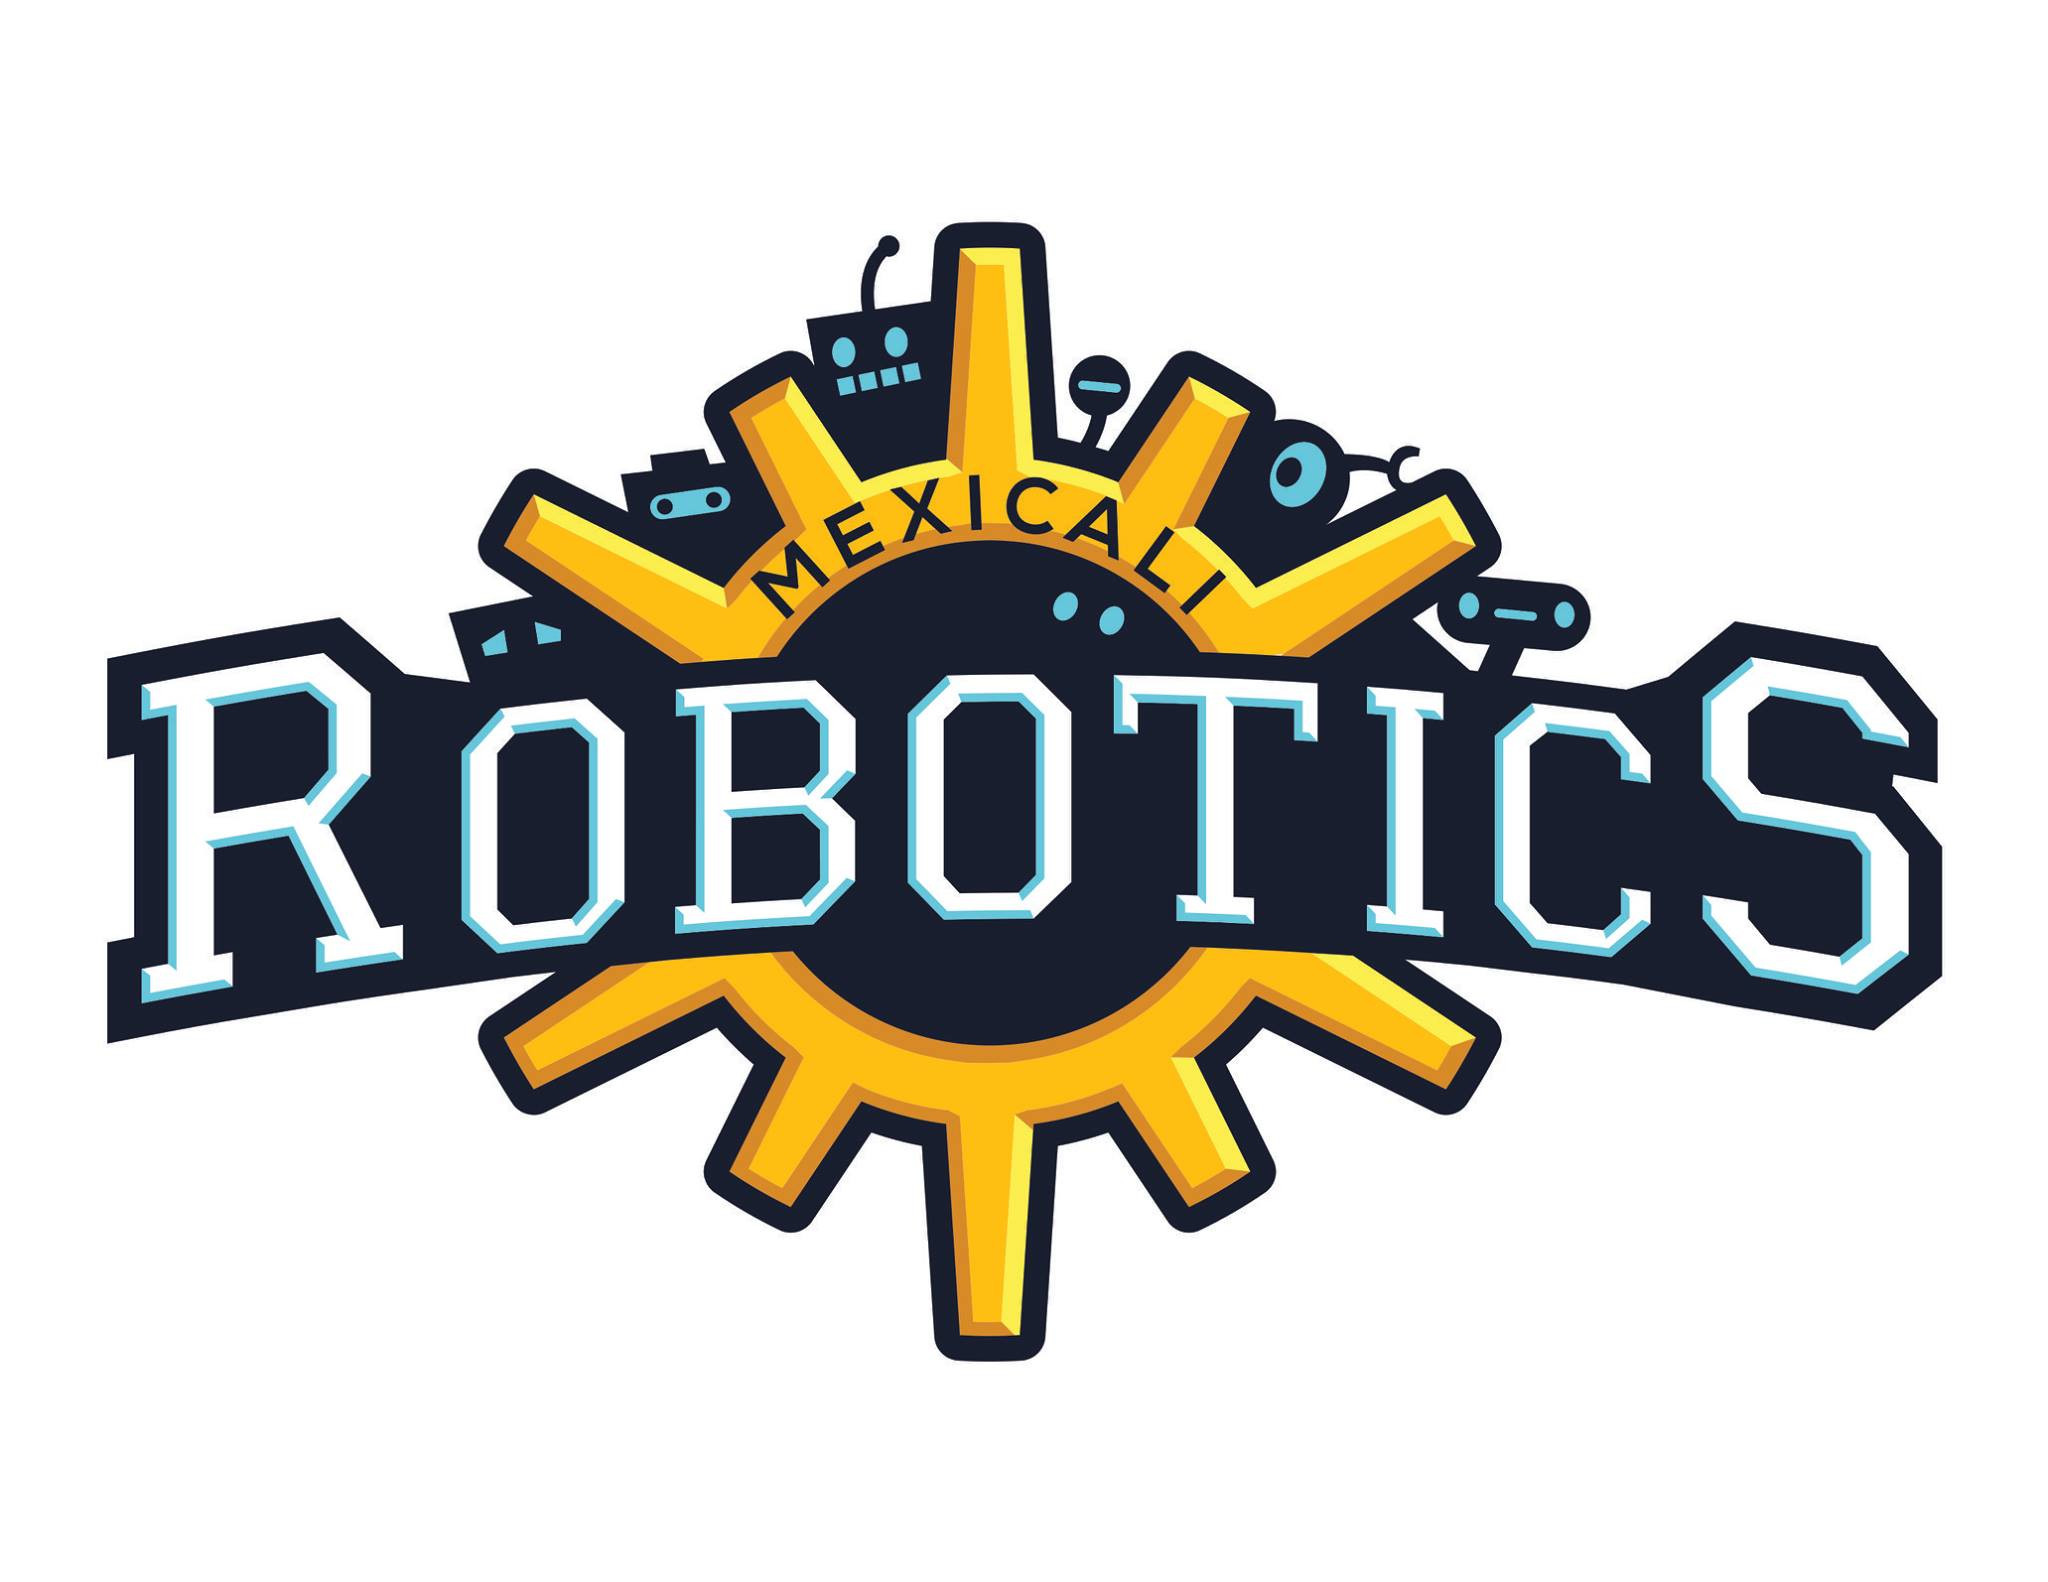 Robotics team logo design